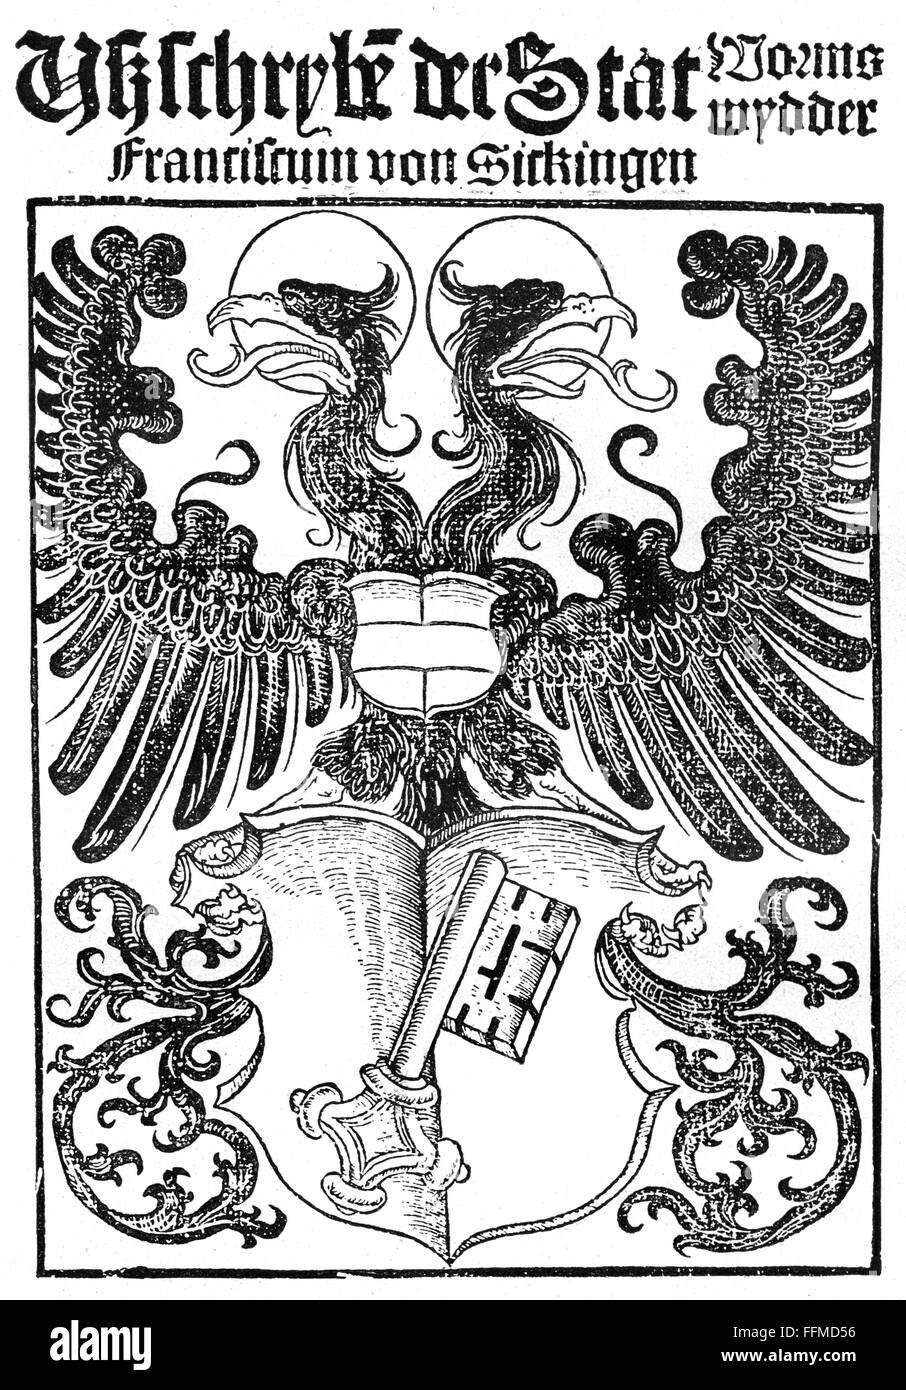 Sickingen, Franz von, 2.3.1481 - 7.5.1523, German imperial knight, feud with the Imperial City Worms, polemic pamphlet against Franz von Sickingen, title, woodcut, 1515, Stock Photo